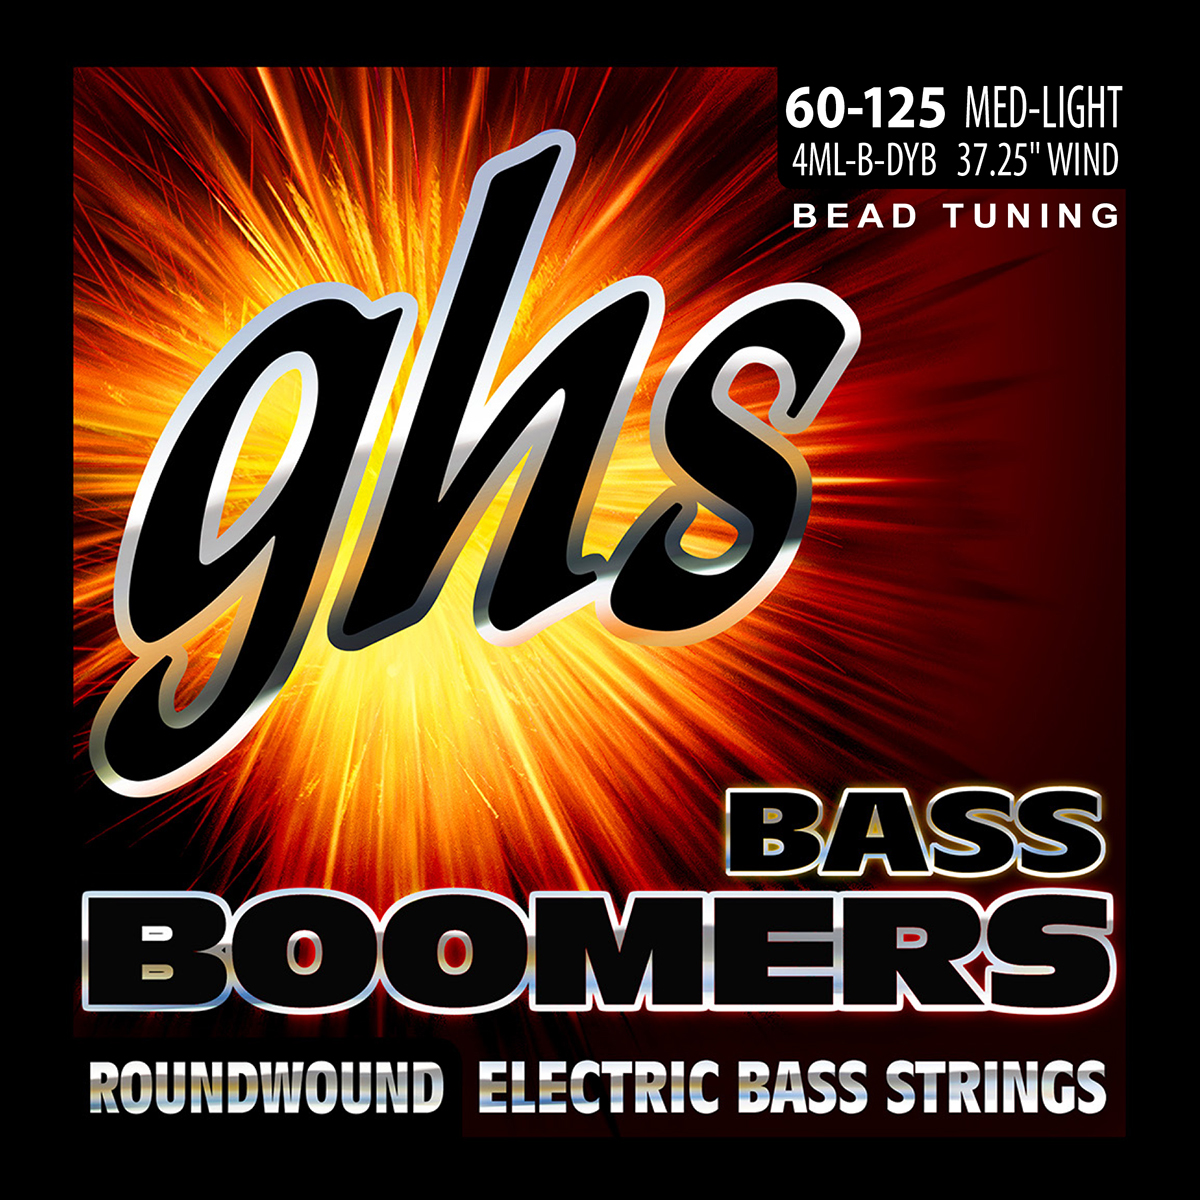 GHS Bass Boomers - Bass String Set, 4-String, Medium Light, .060-.125", BEAD Tuning